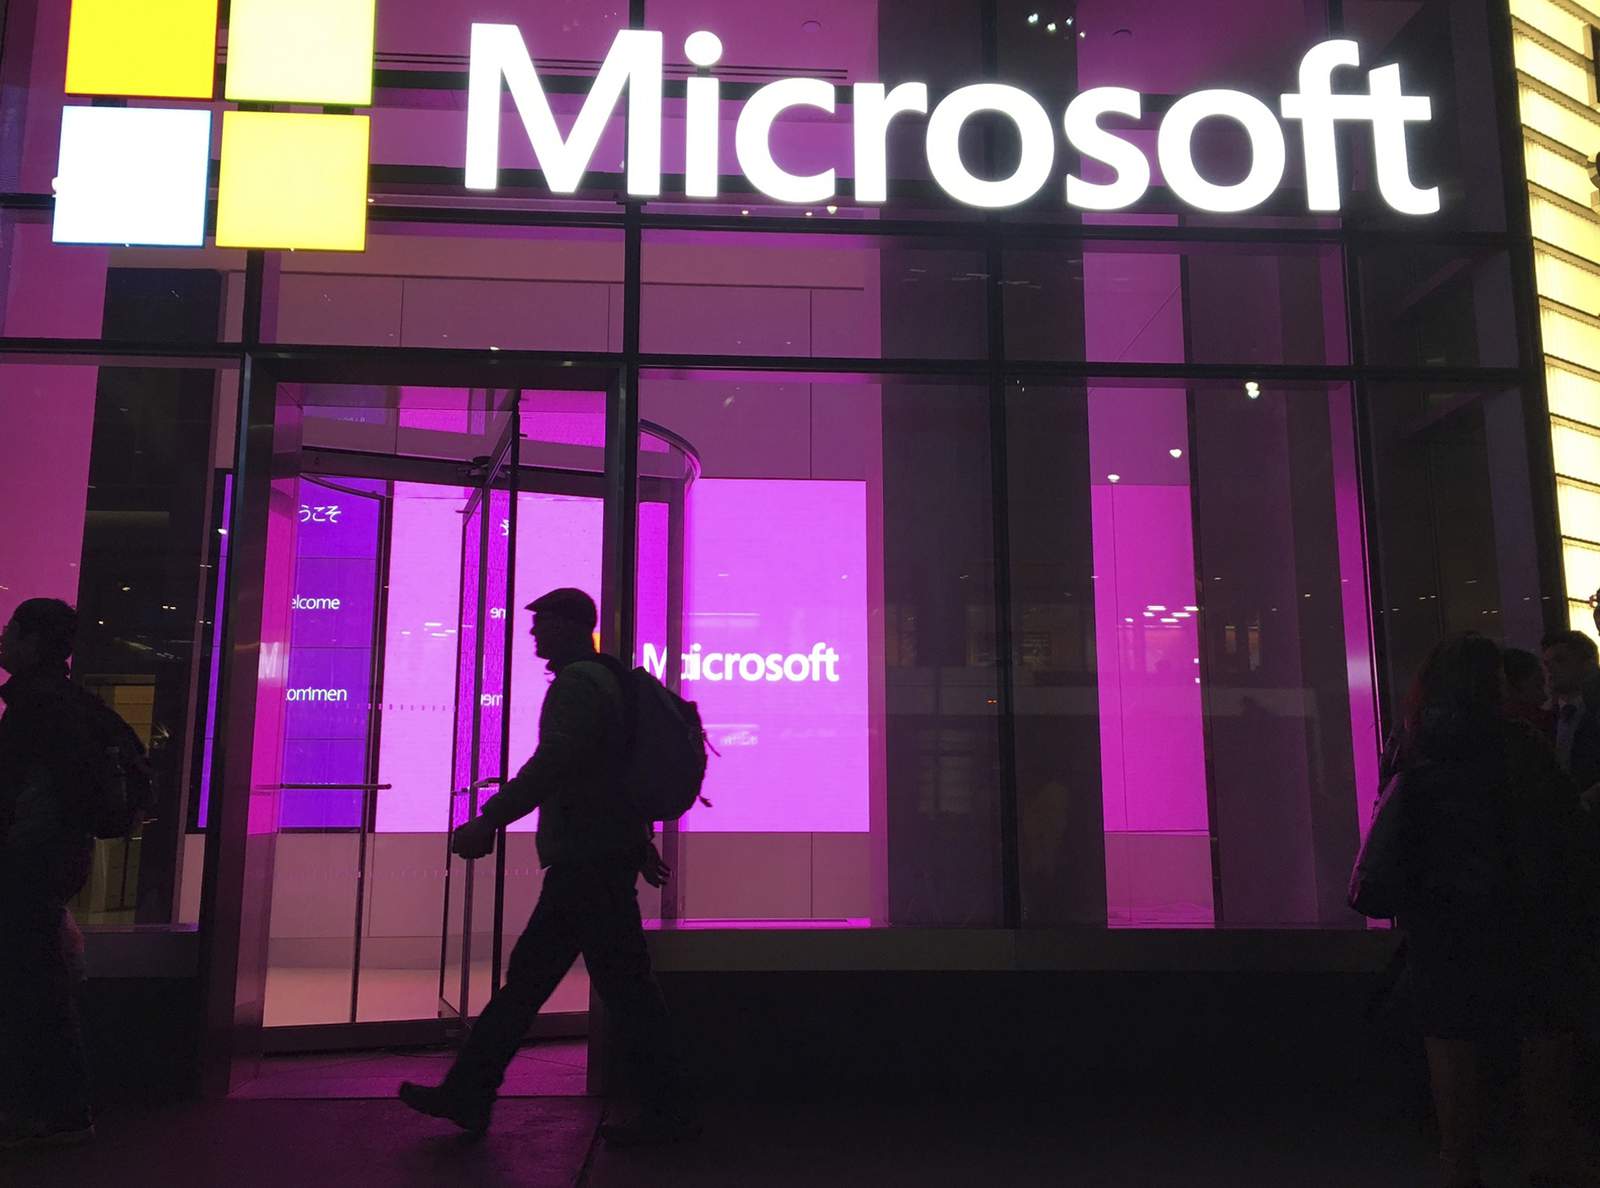 Russian hackers targeting U.S. campaigns, Microsoft says